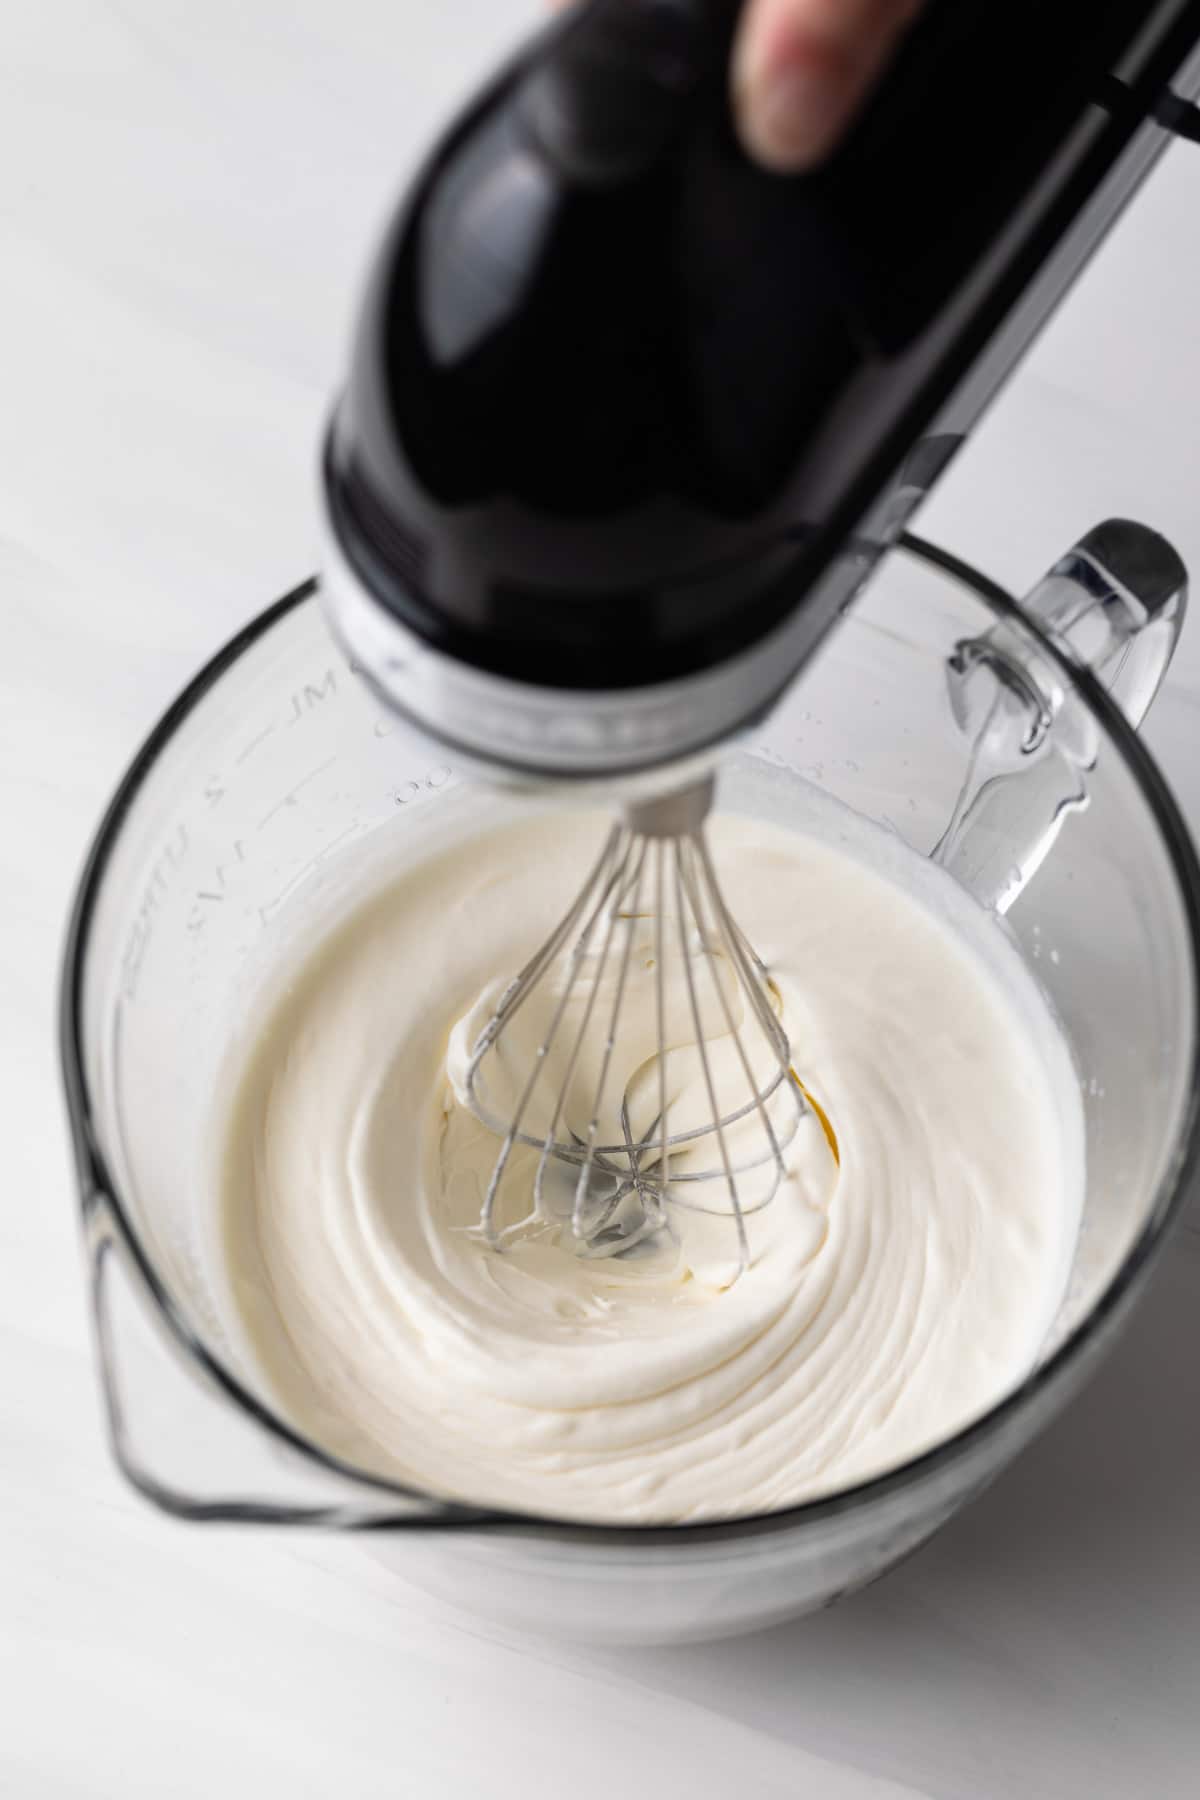 mixer whipping cream